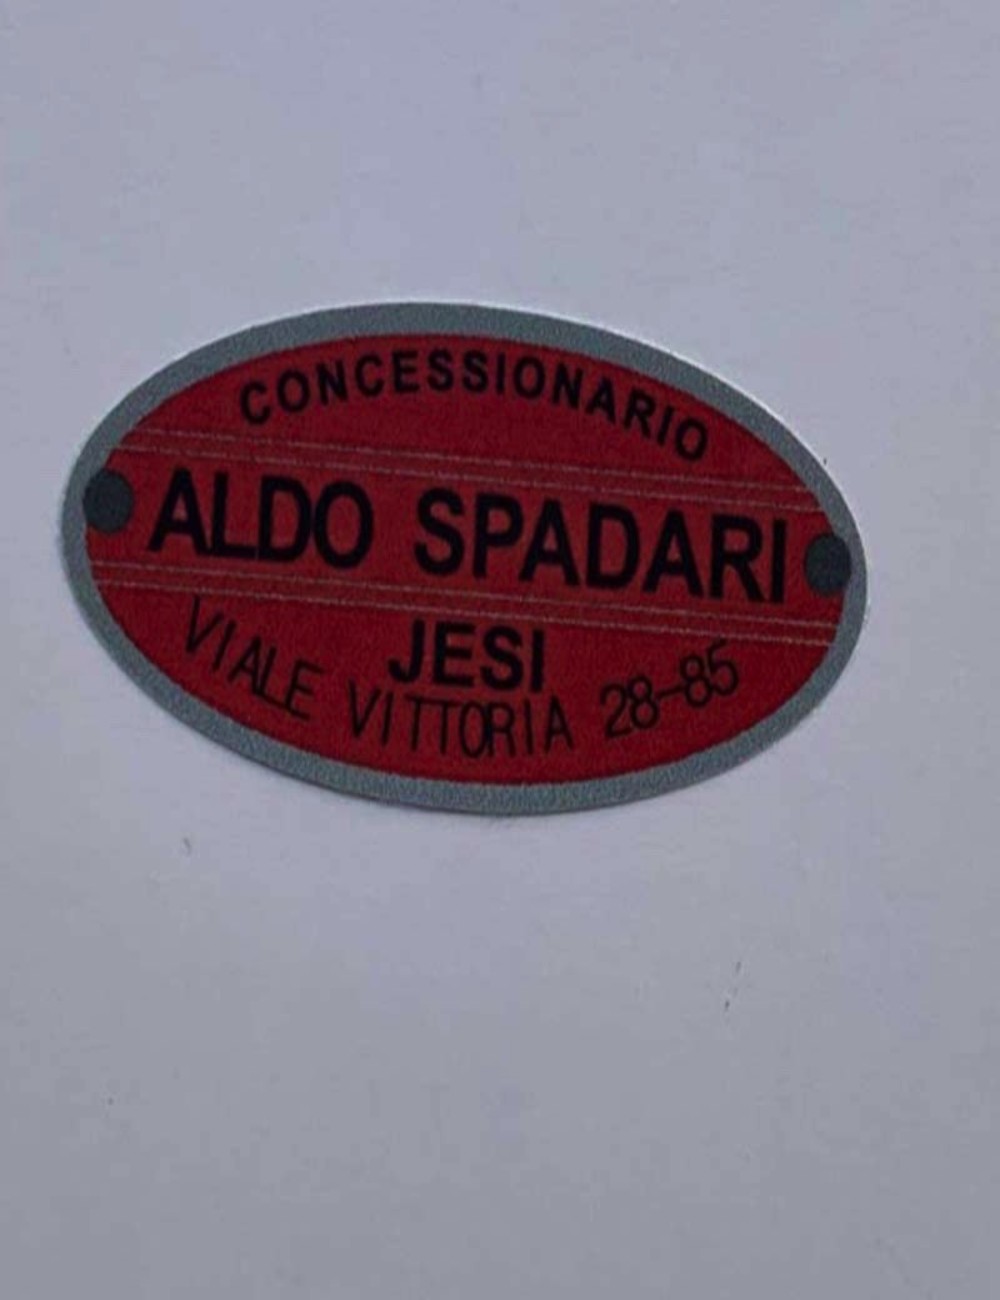 Adesivo concessionario Aldo Spadari. Dimensione:5,2 cm x 2,5 cm.